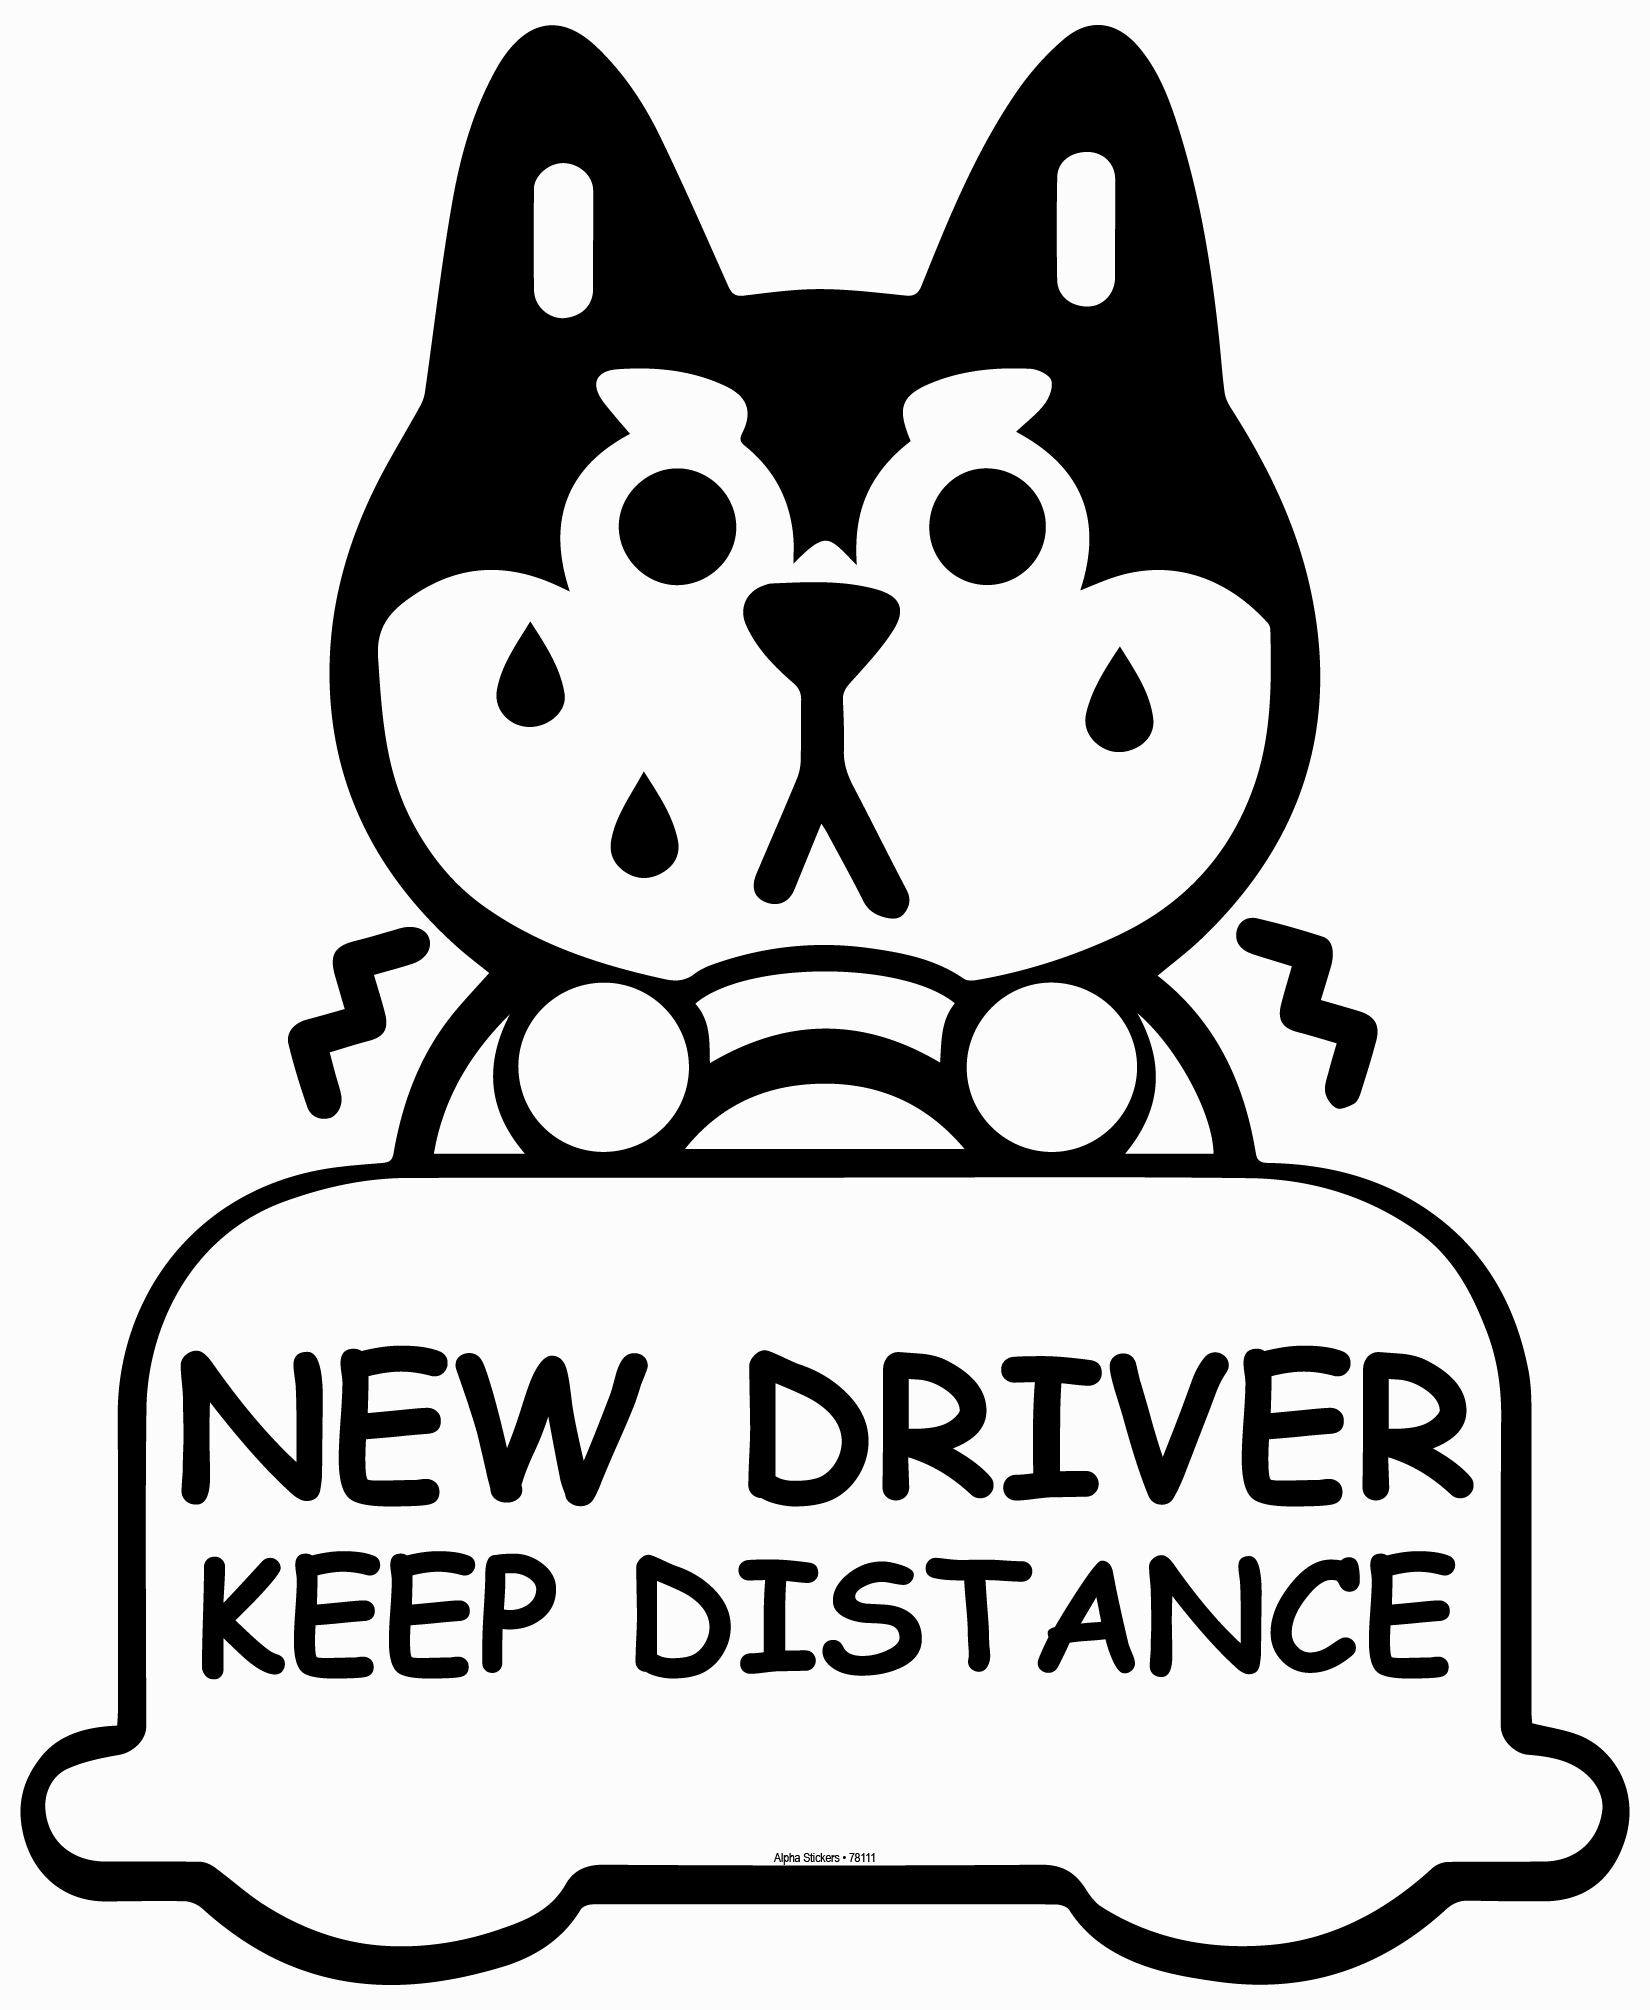 New Driver Keep Distance Vinyl Sticker Size 55w X 67h Lazada Ph 